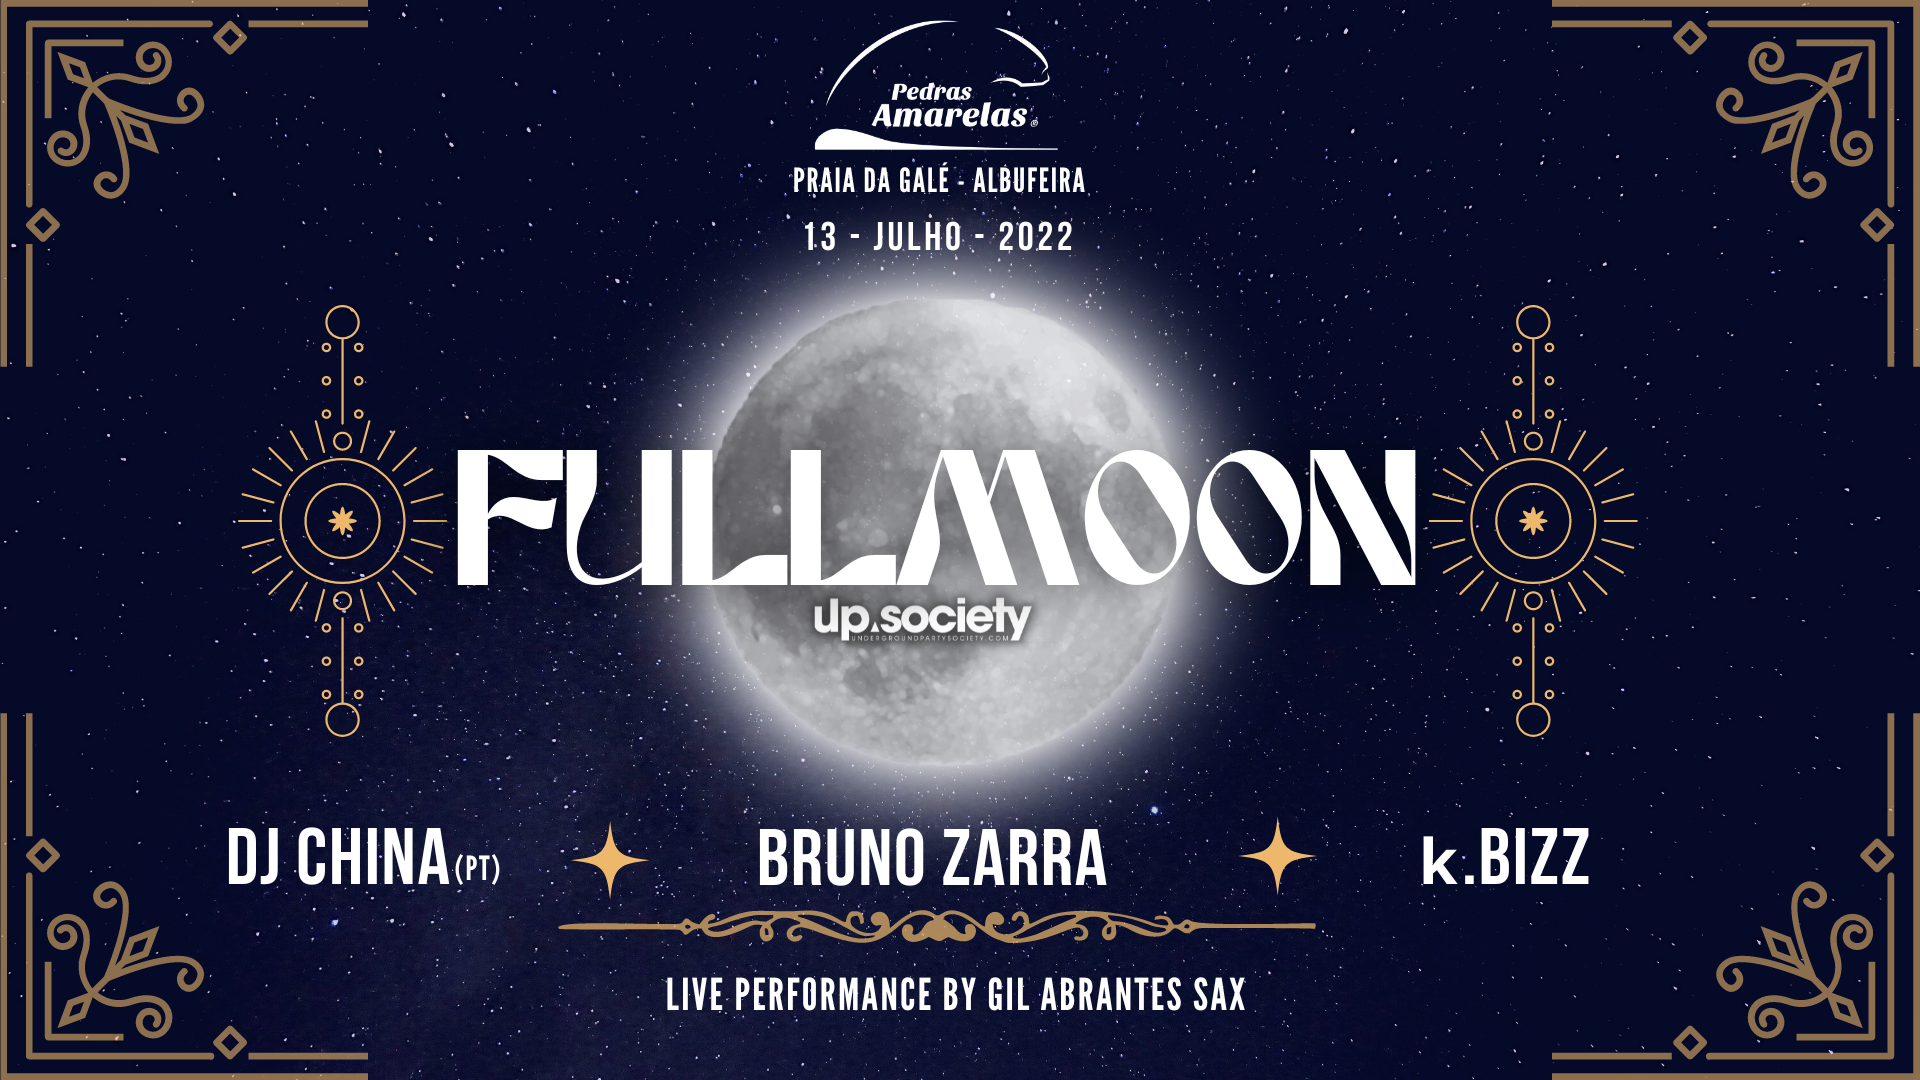 Full Moon at Pedras Amarelas - フライヤー表